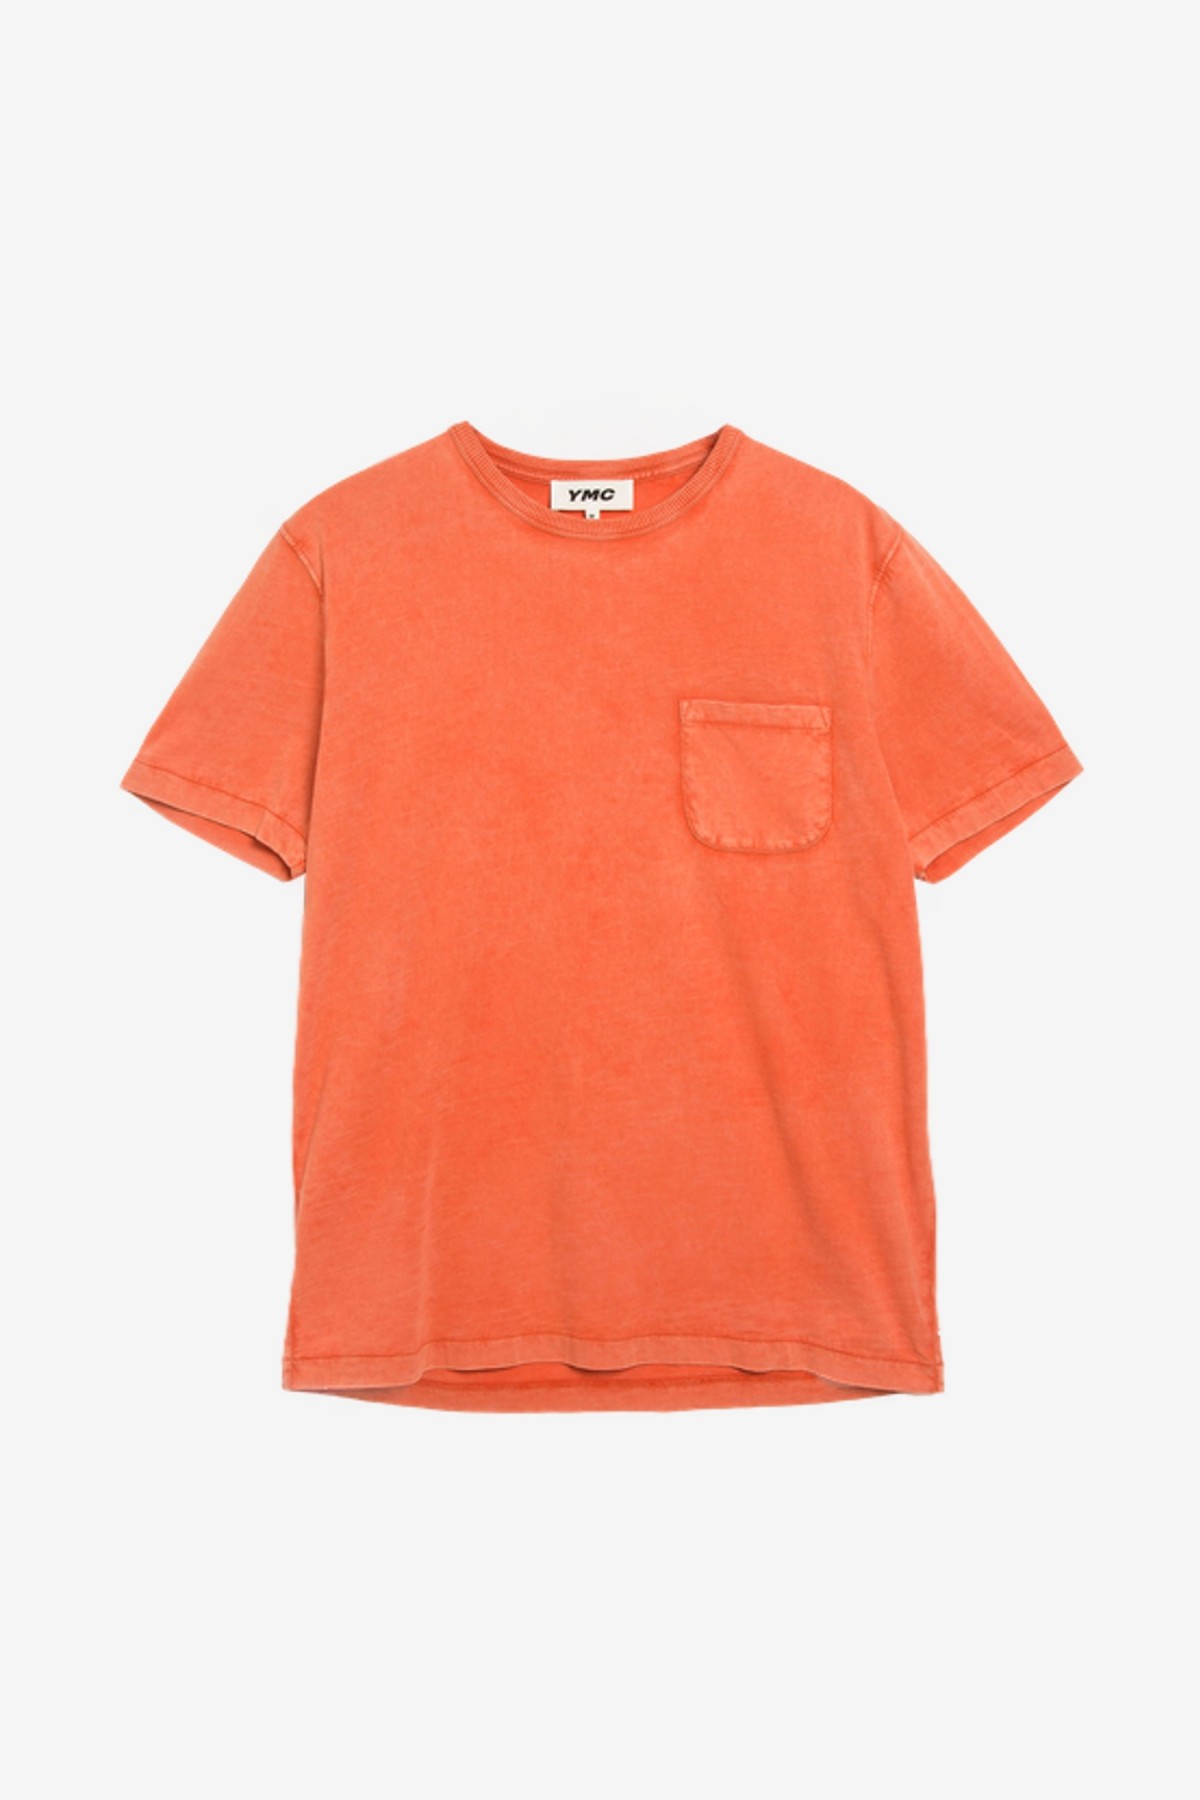 YMC You Must Create Wild Ones Pocket T Shirt in Orange